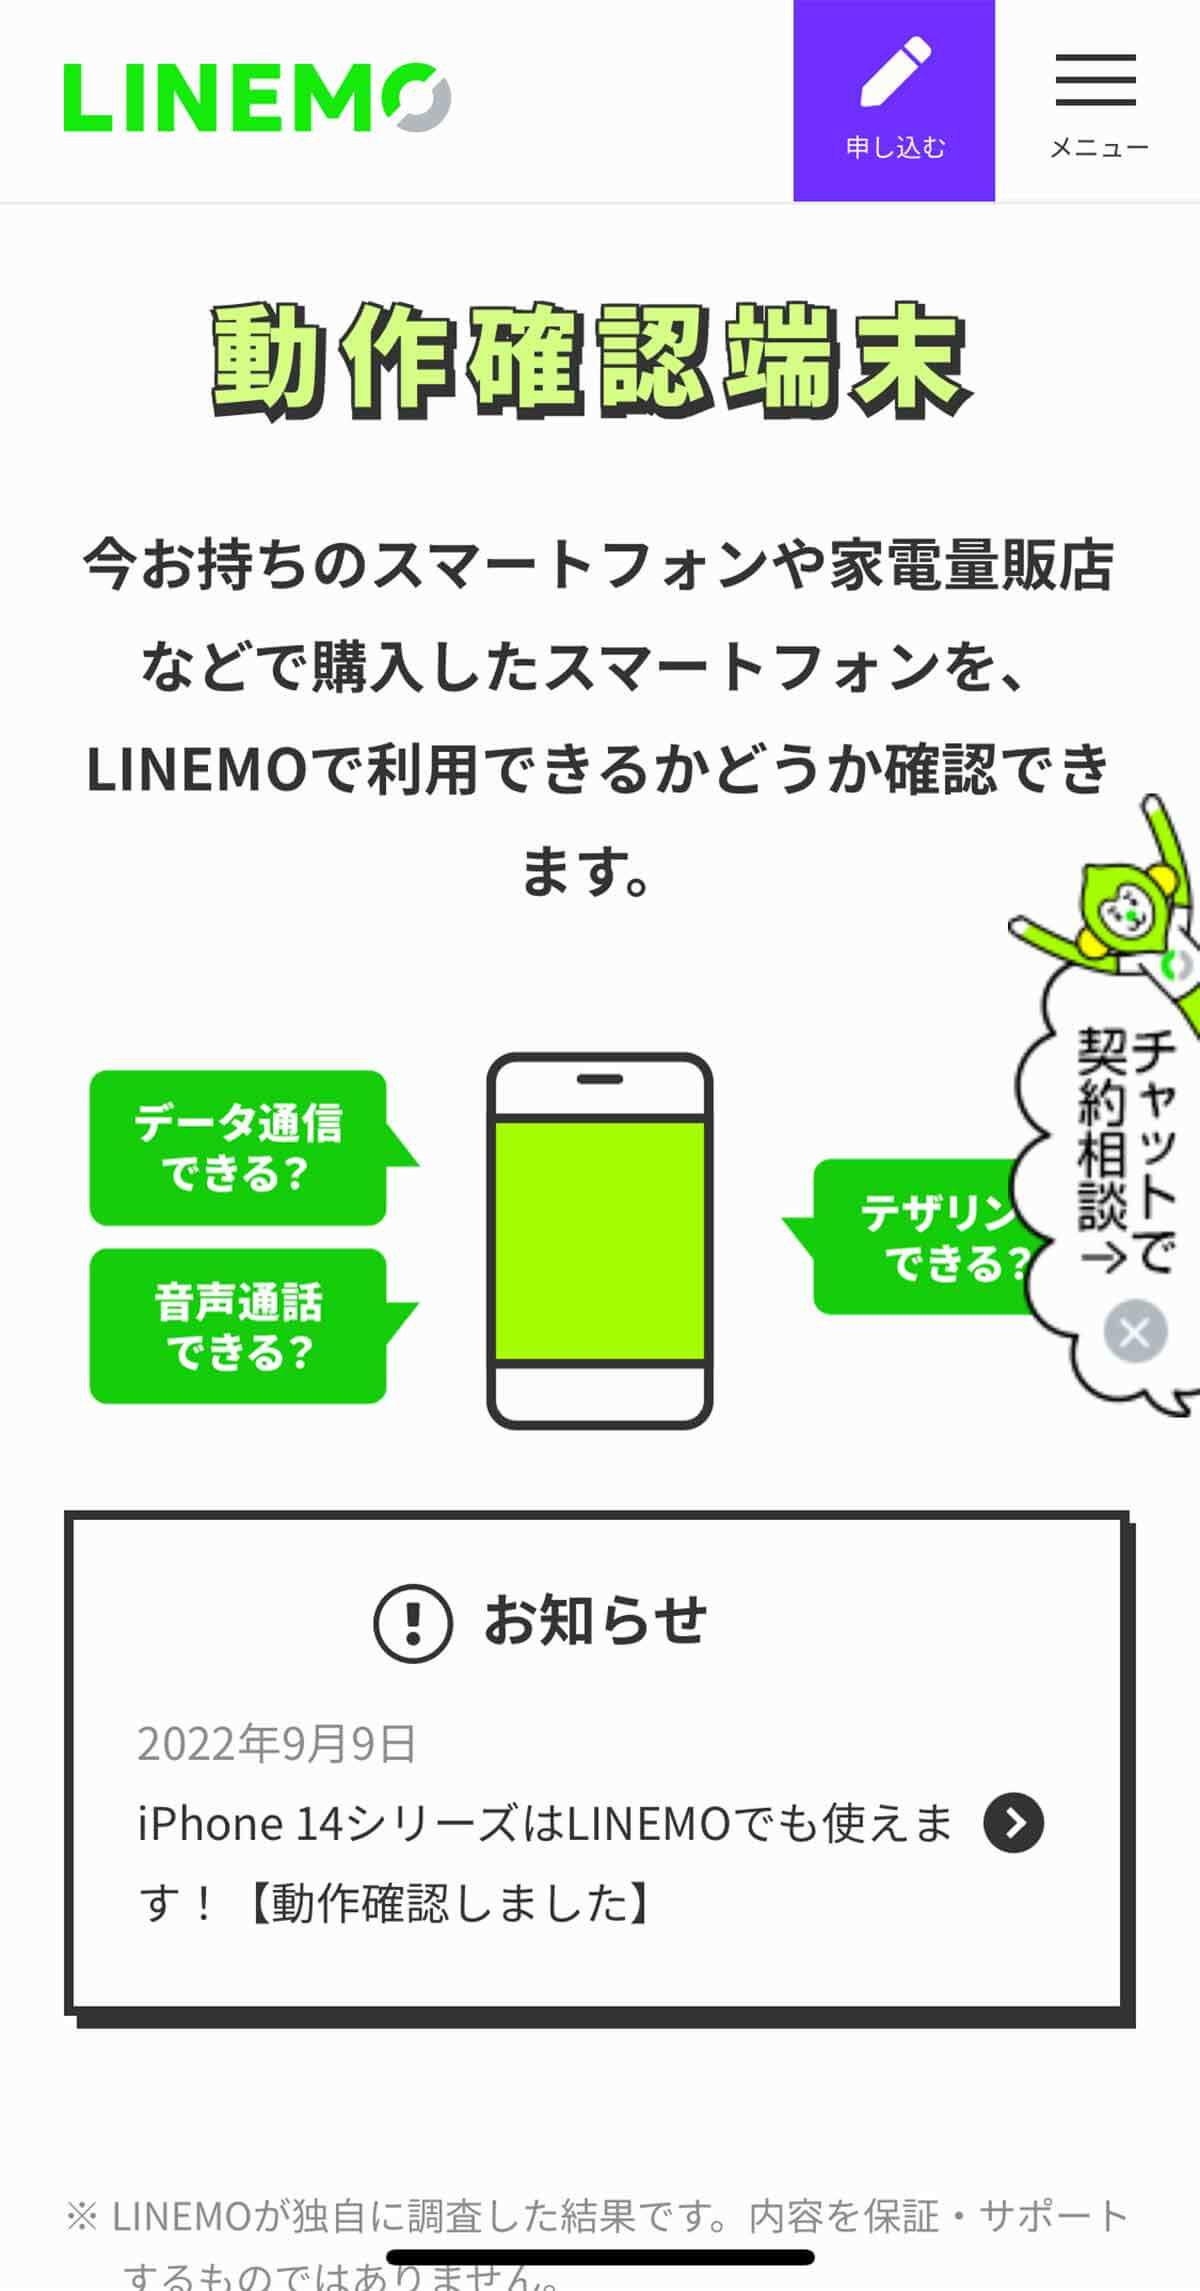 LINEMO公式サイト